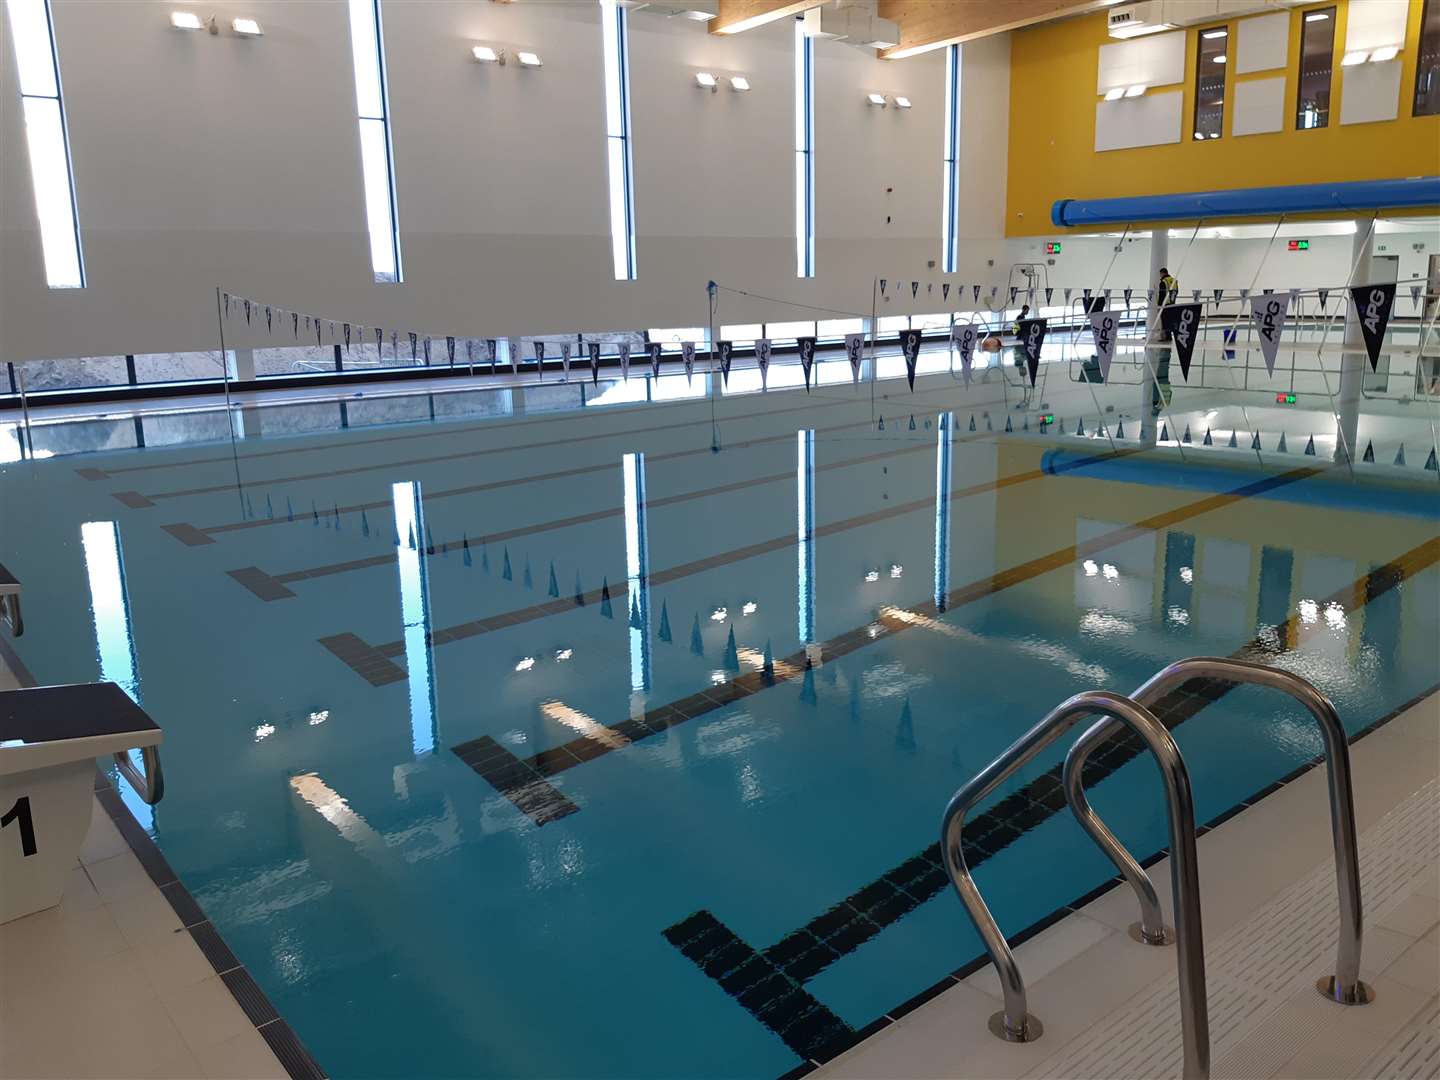 The eight-lane pool